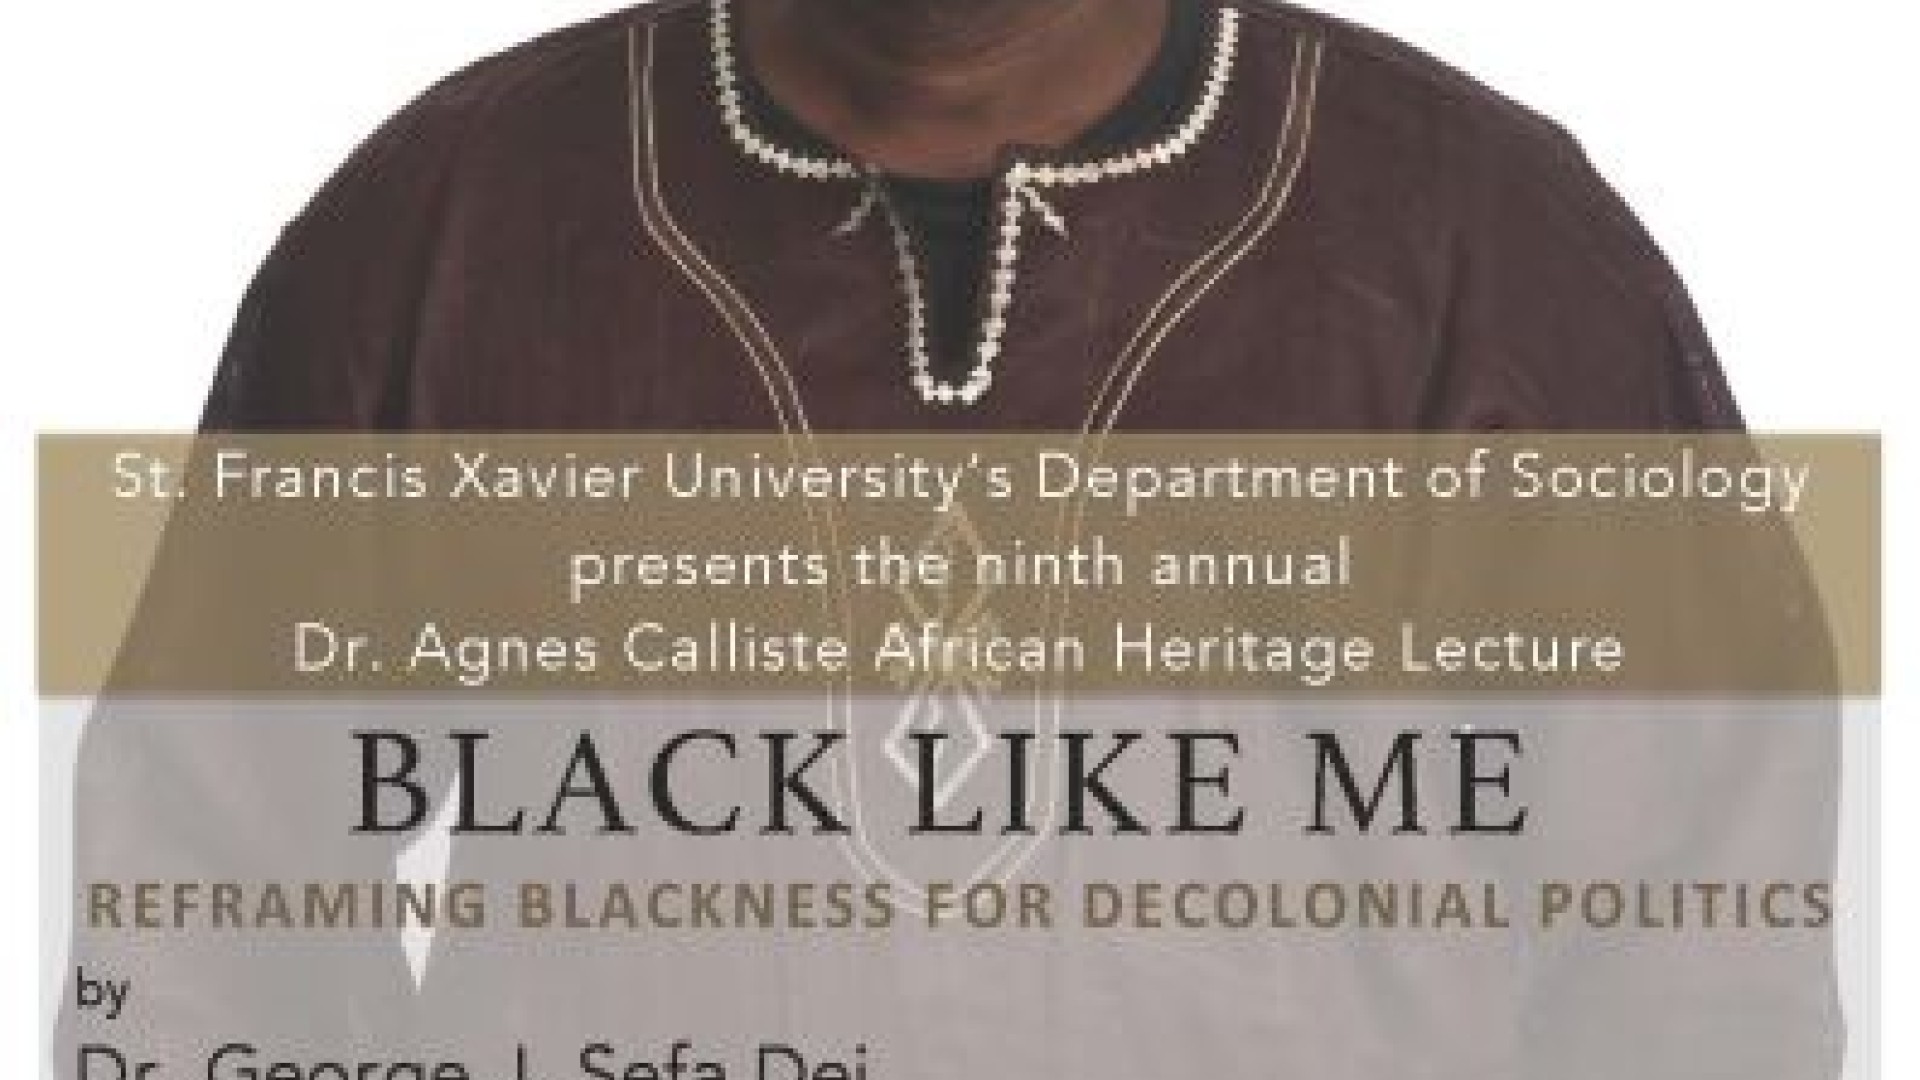 Poster: Black Like Me, featuring Dr. George J. Sefa Dei